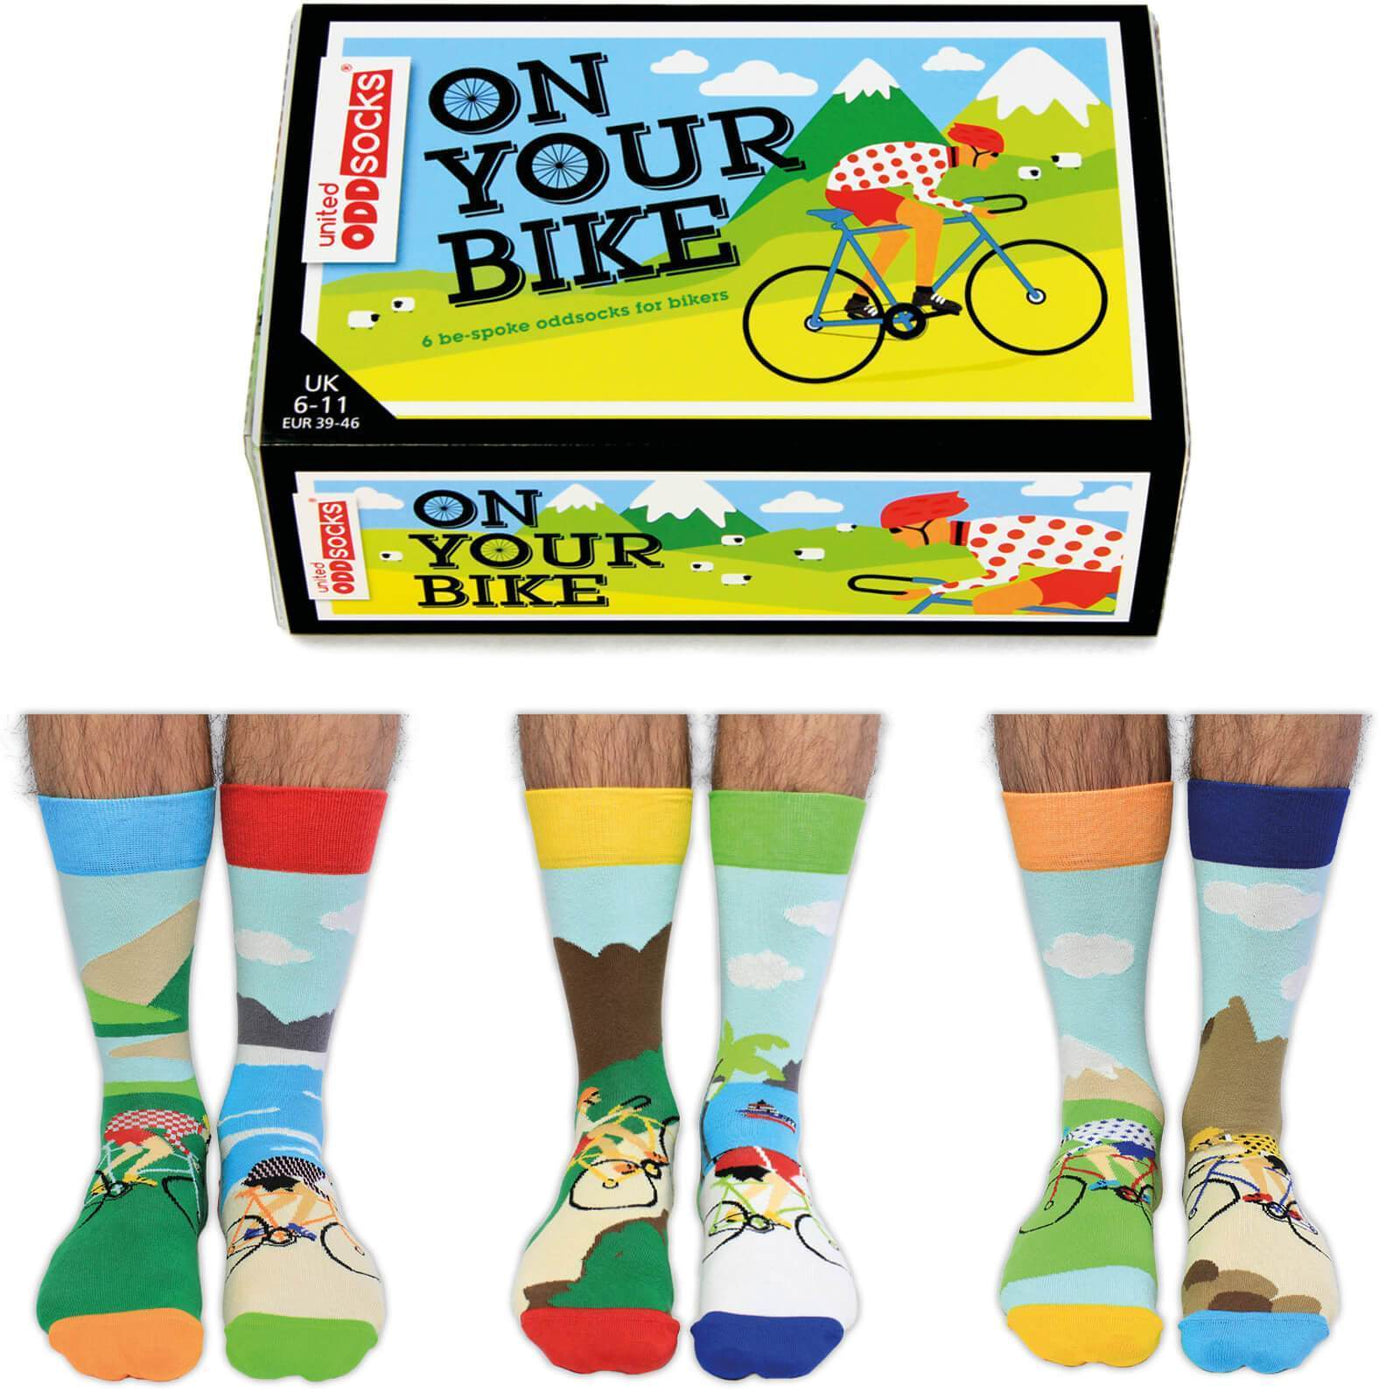 United Odd Socks Socks Novelty Mens Bike Socks Presented In Gift Box